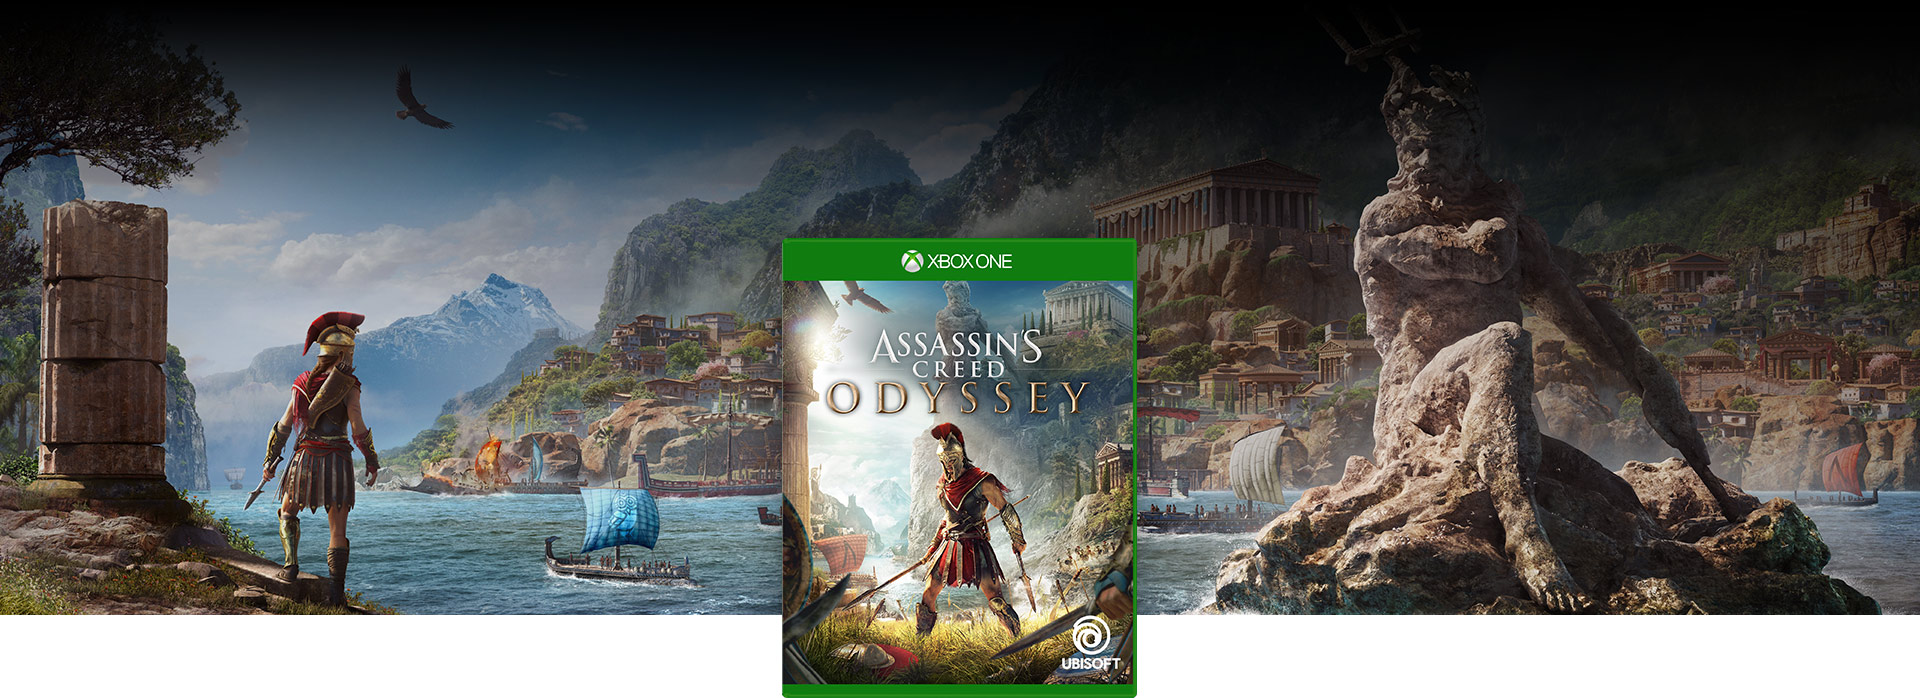 Assassin’s Creed Odyssey boxshot, Poseidon’s statue sits in the Aegean Sea